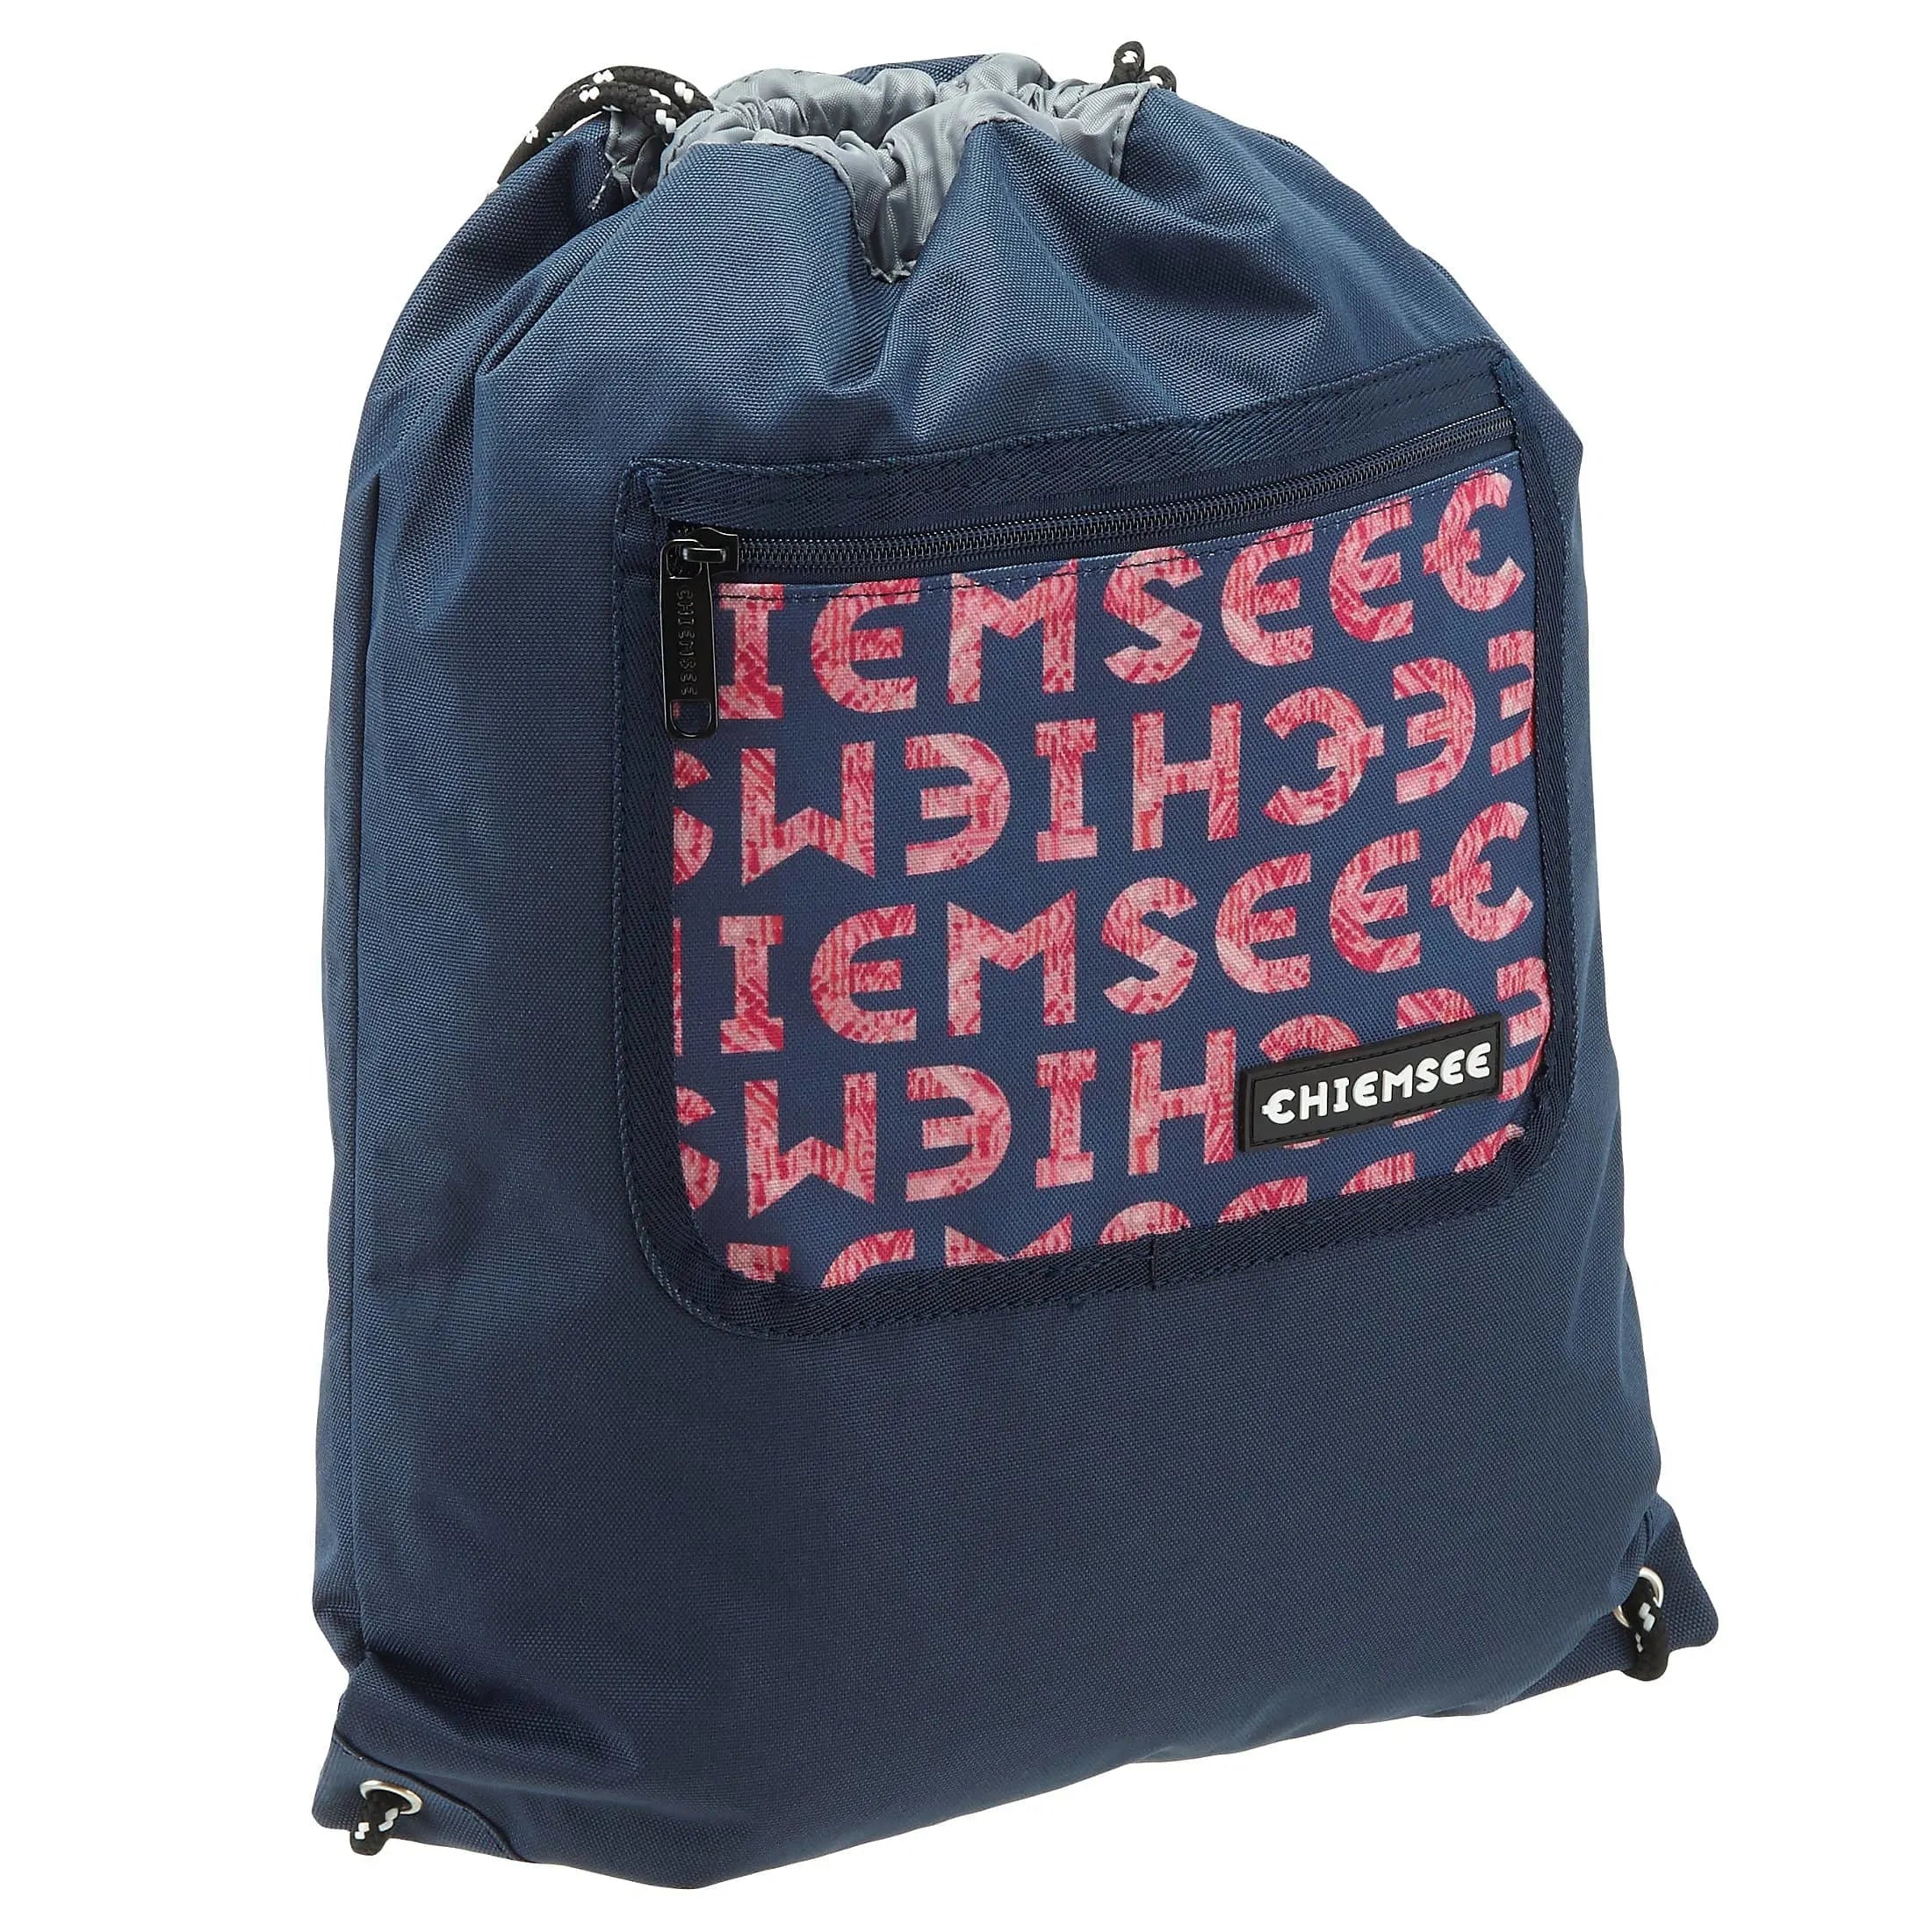 Chiemsee Sports & Travel Bags Drawstring sports bag 45 cm - dark green-sand